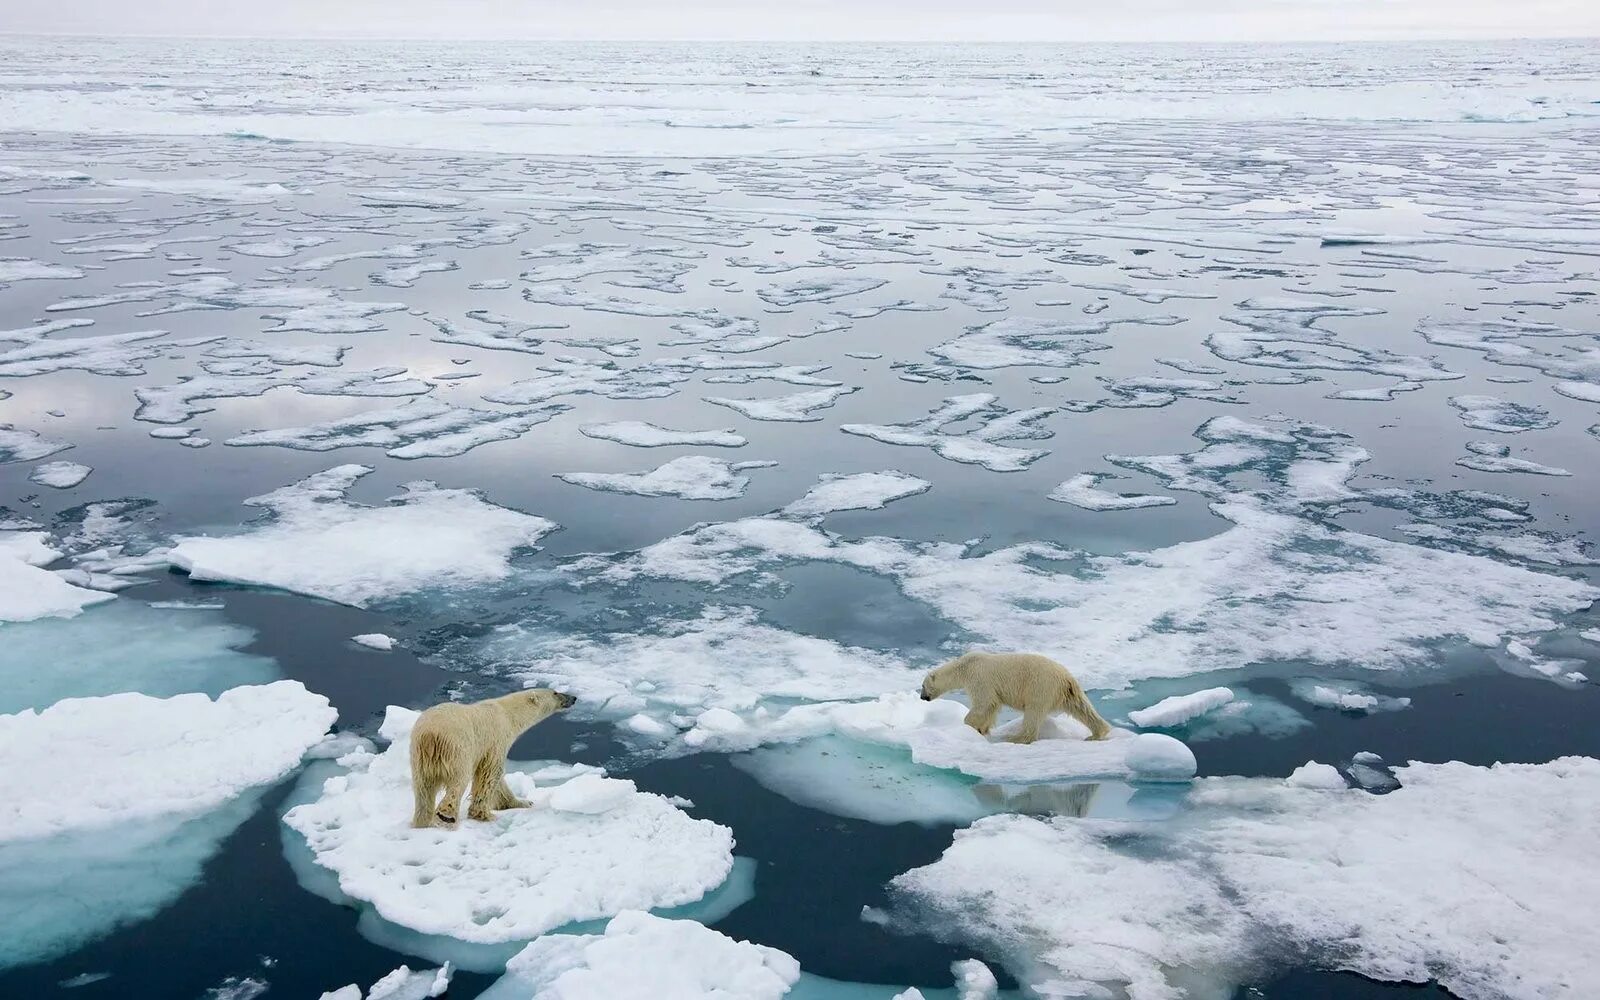 Арктика Северный Ледовитый океан. • Арктика — таяние арктических льдов,. Северный Ледовитый океан и Антарктида. Северный Ледовитый океан белый медведь. Как меняется природа арктических морей